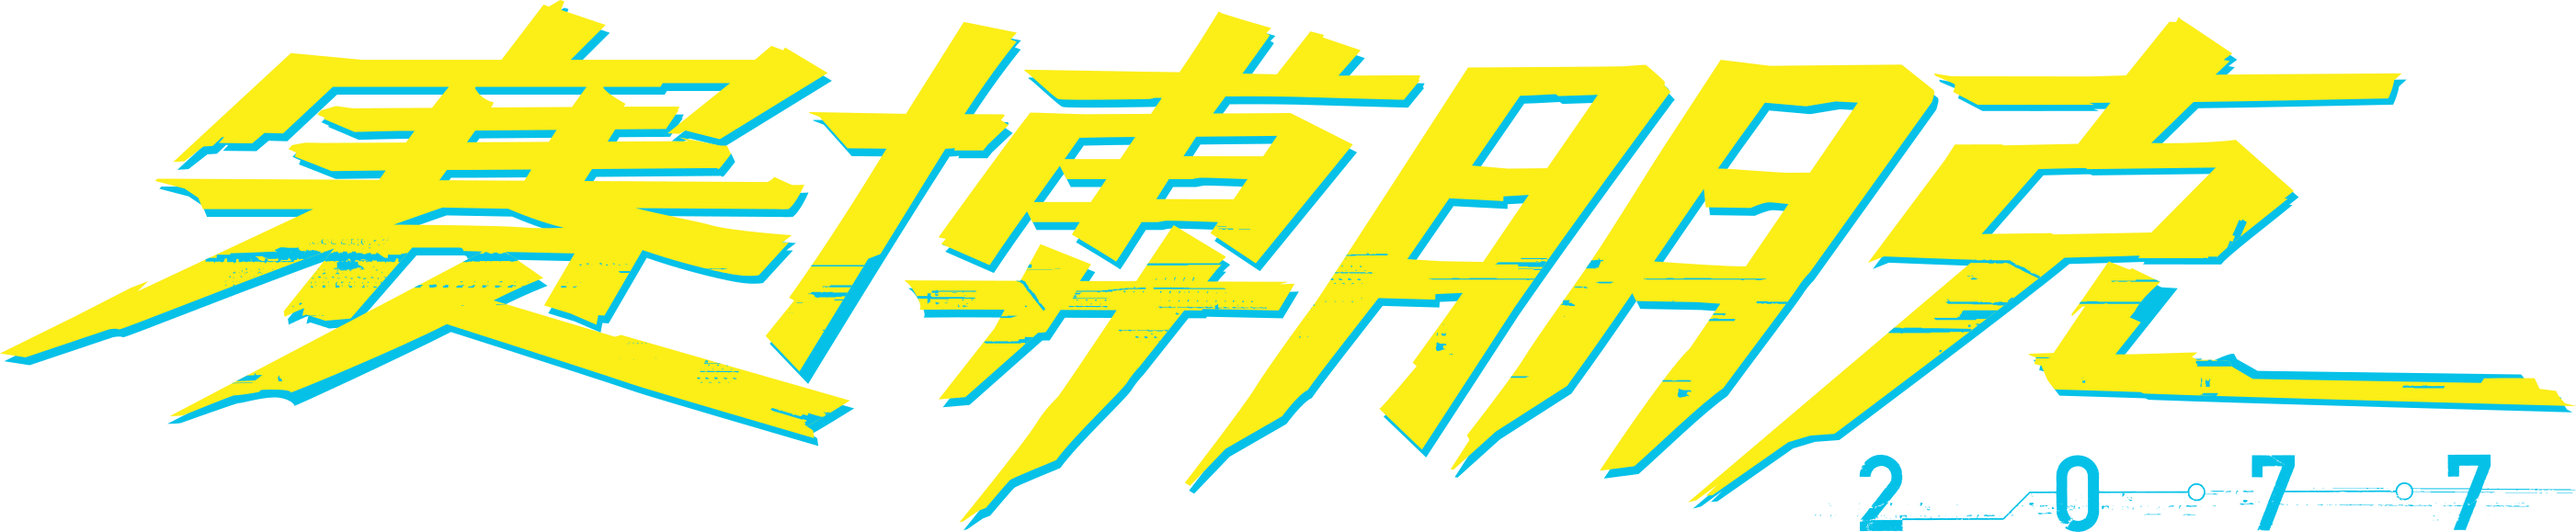 Cyberpunk логотип png фото 77